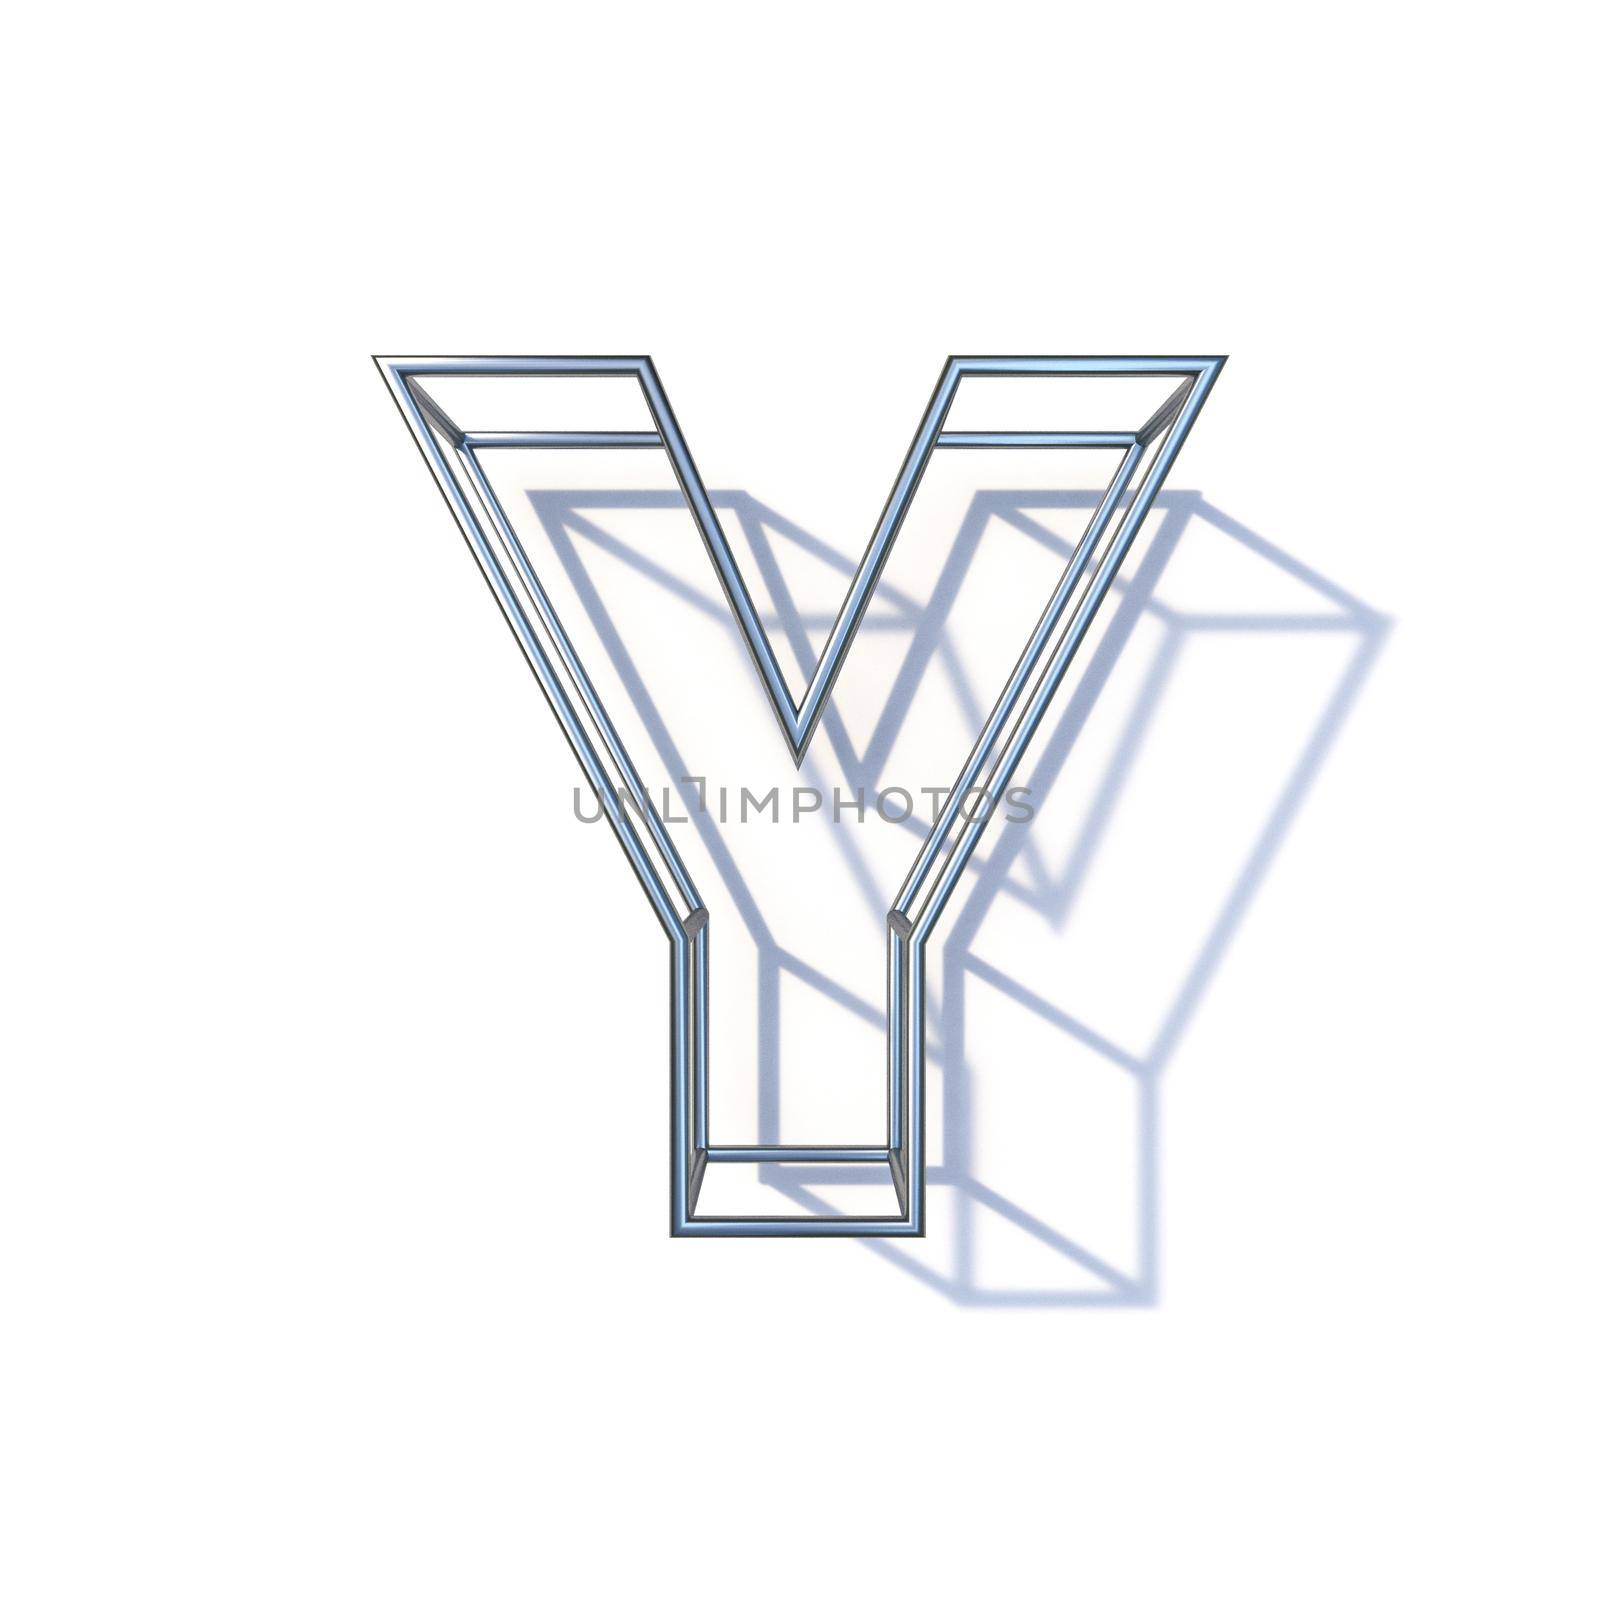 Steel wire frame font Letter Y 3D by djmilic